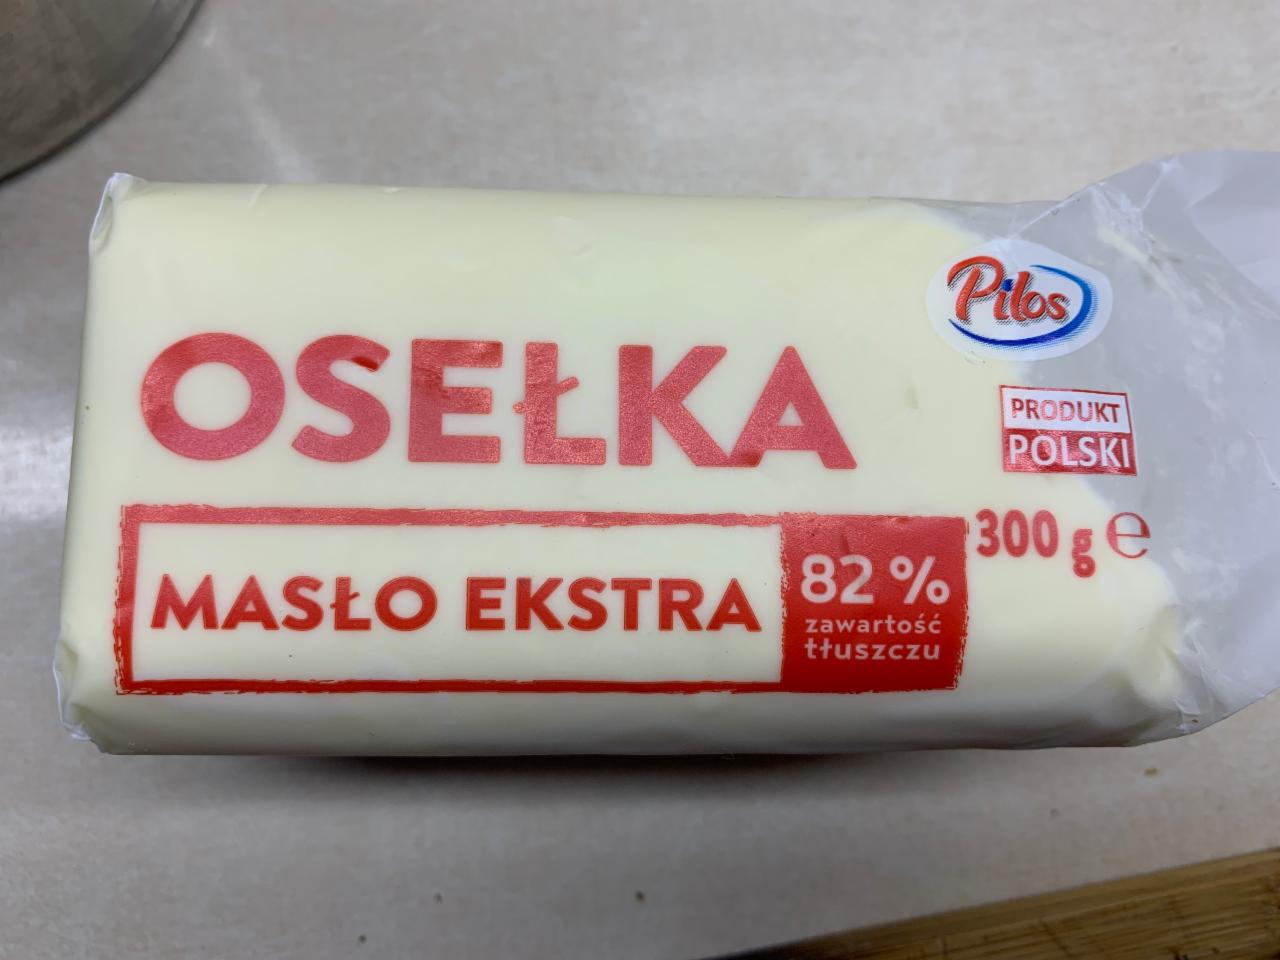 Фото - сливочное масло 82% Osełka Pilos